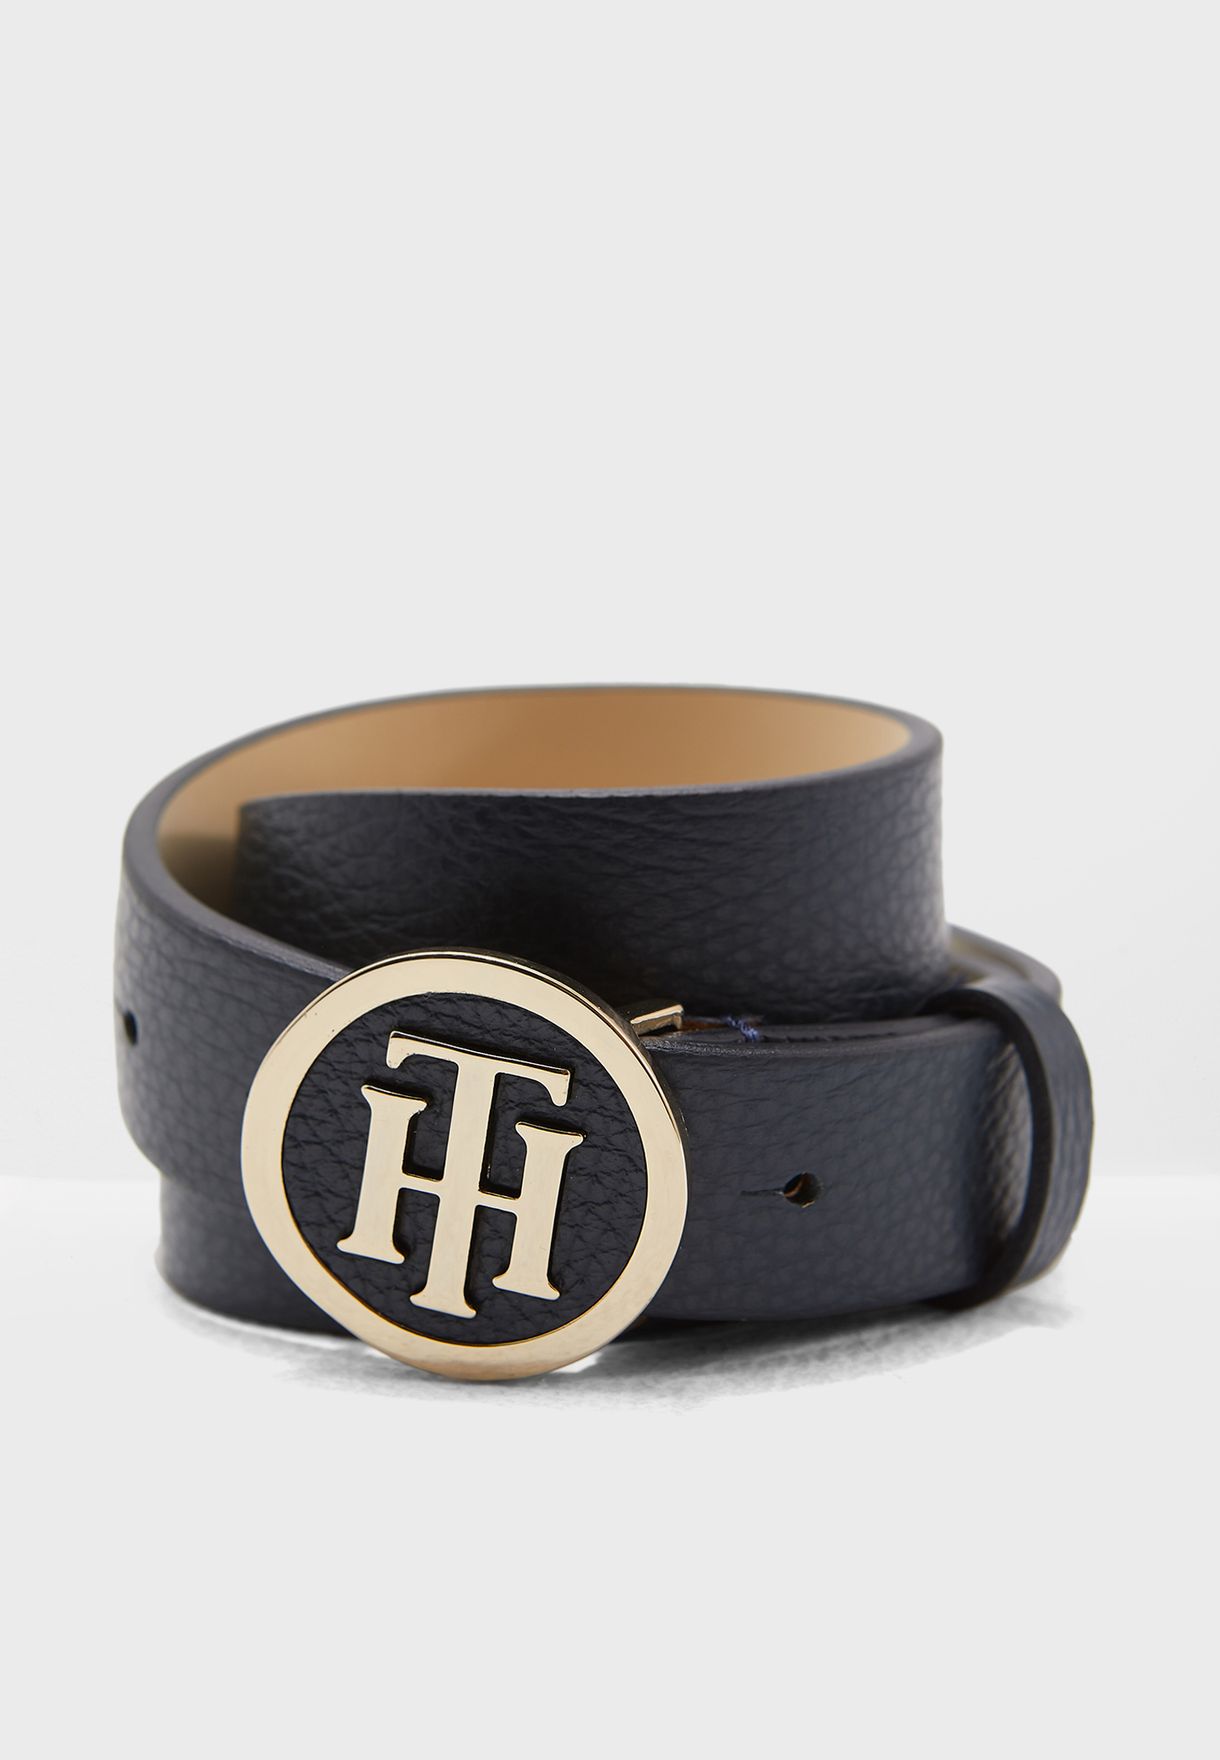 Tommy Hilfiger Belt Logo Top Sellers, 56% OFF | www 